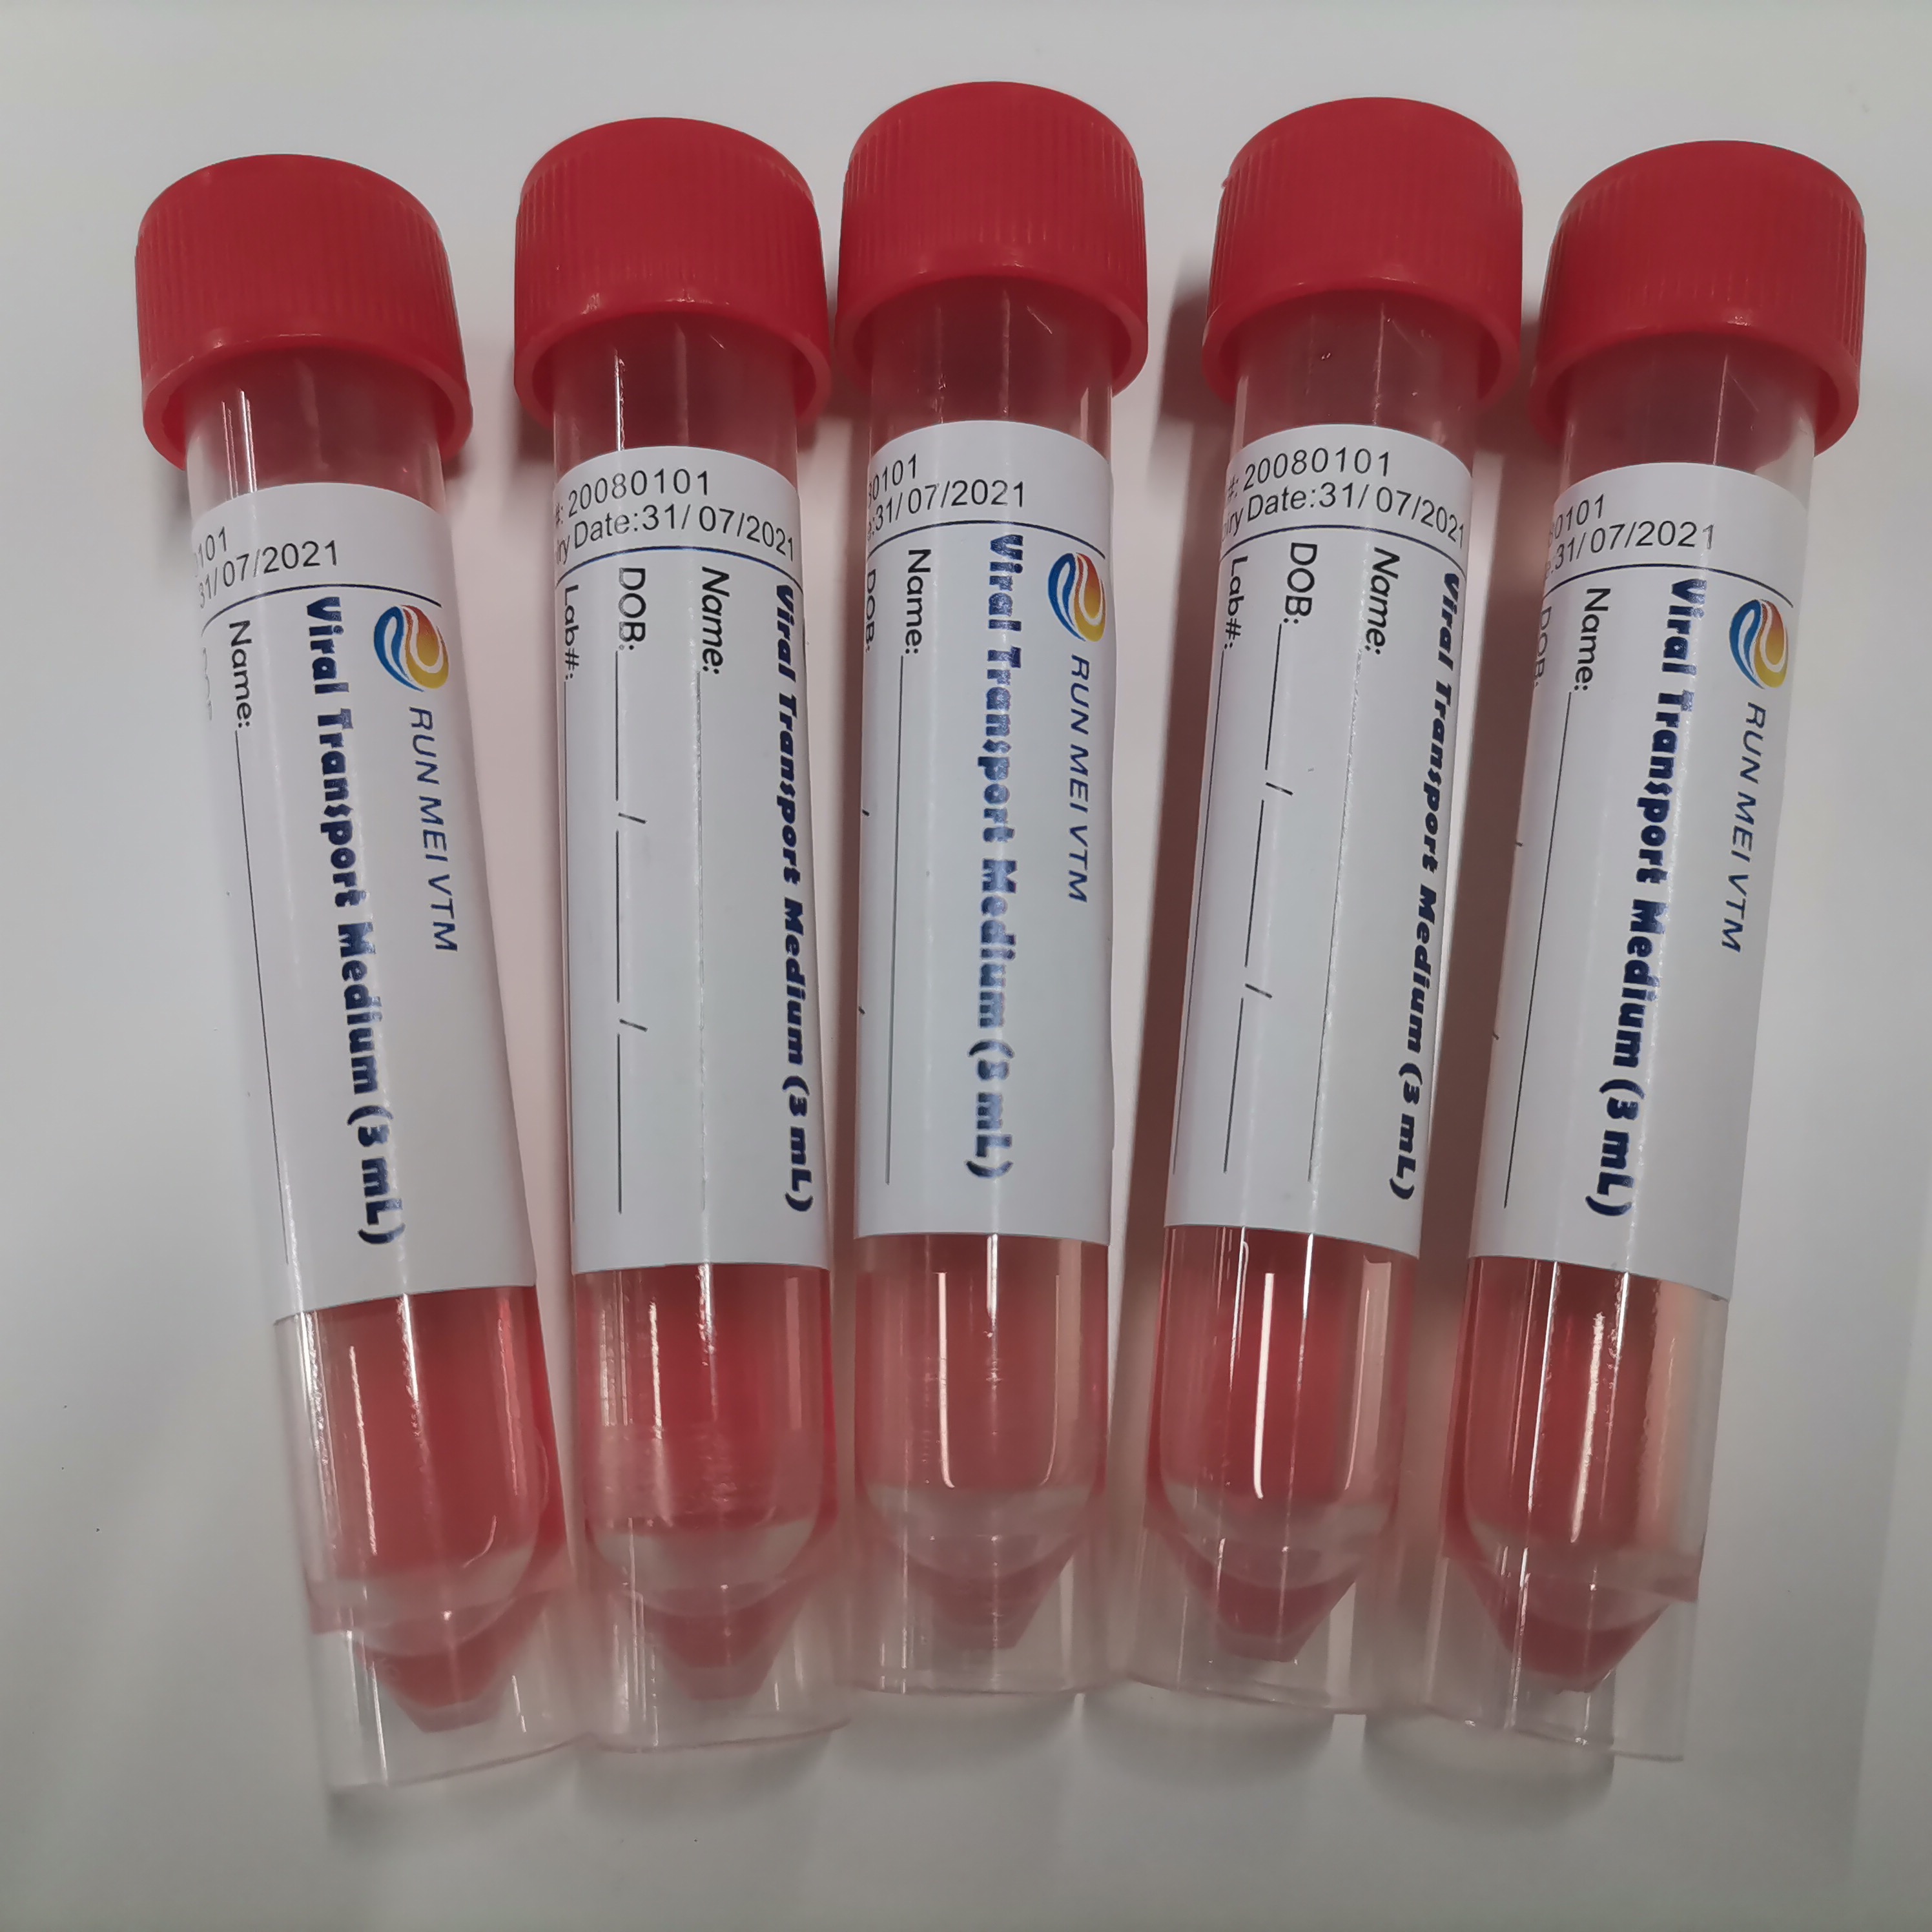 VTM - Tubos de transporte virales con certificación CE FDA